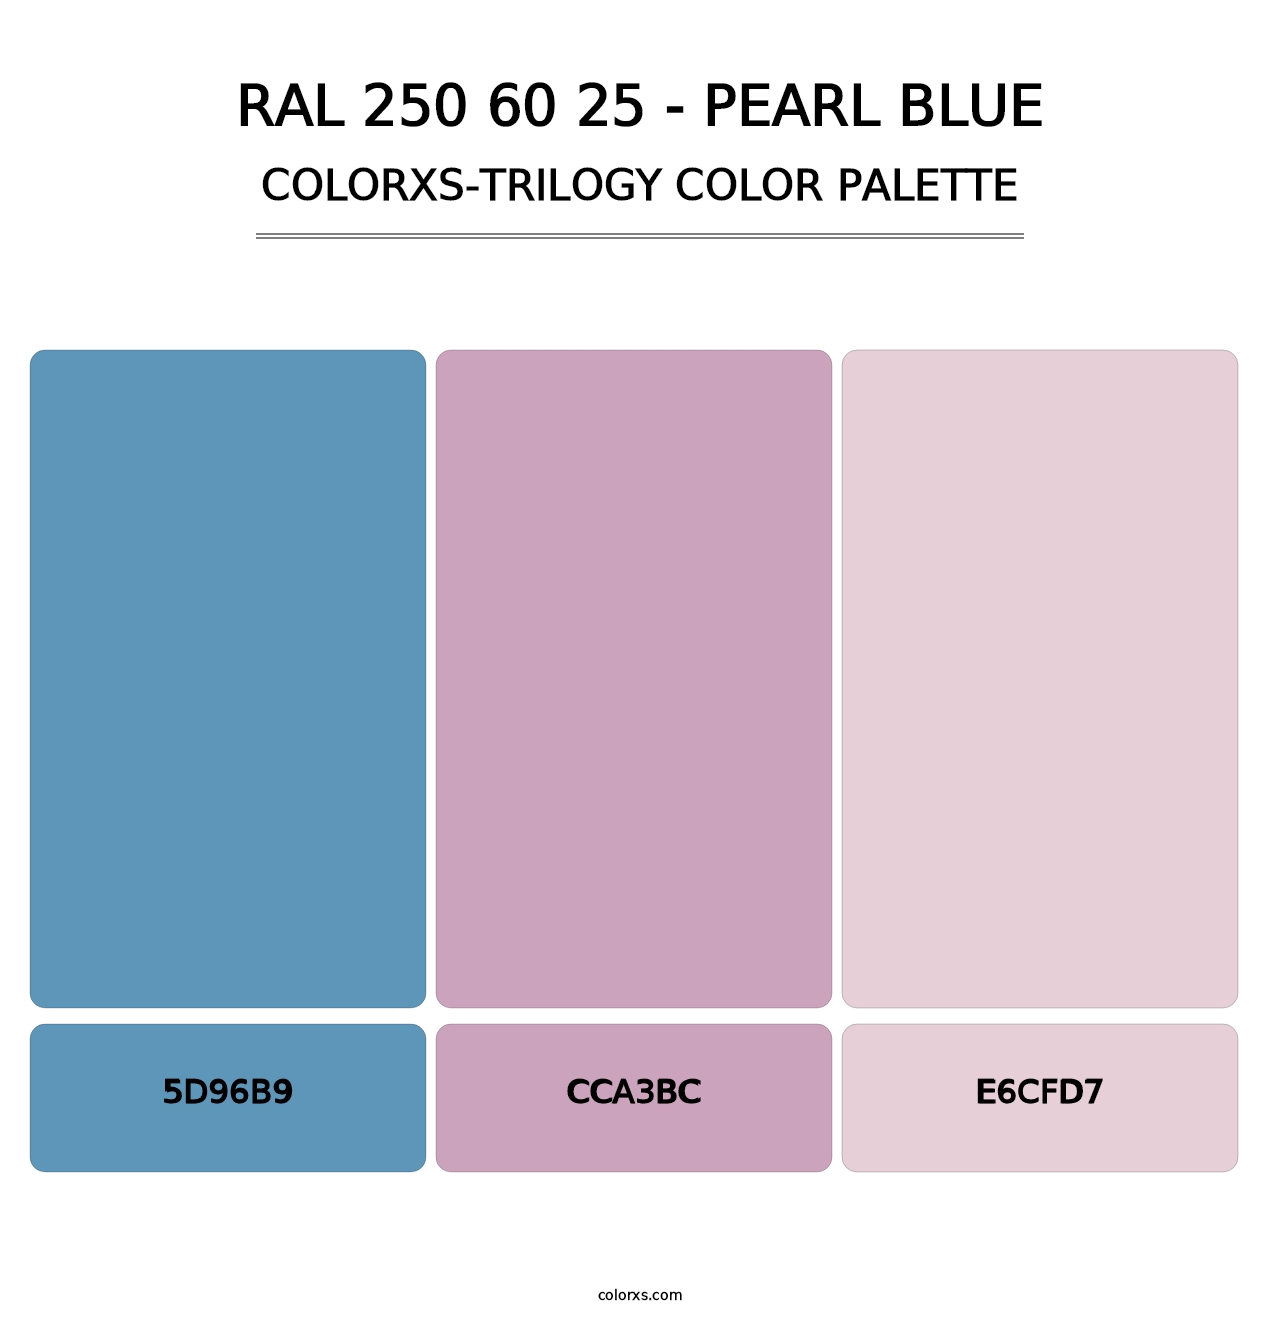 RAL 250 60 25 - Pearl Blue - Colorxs Trilogy Palette